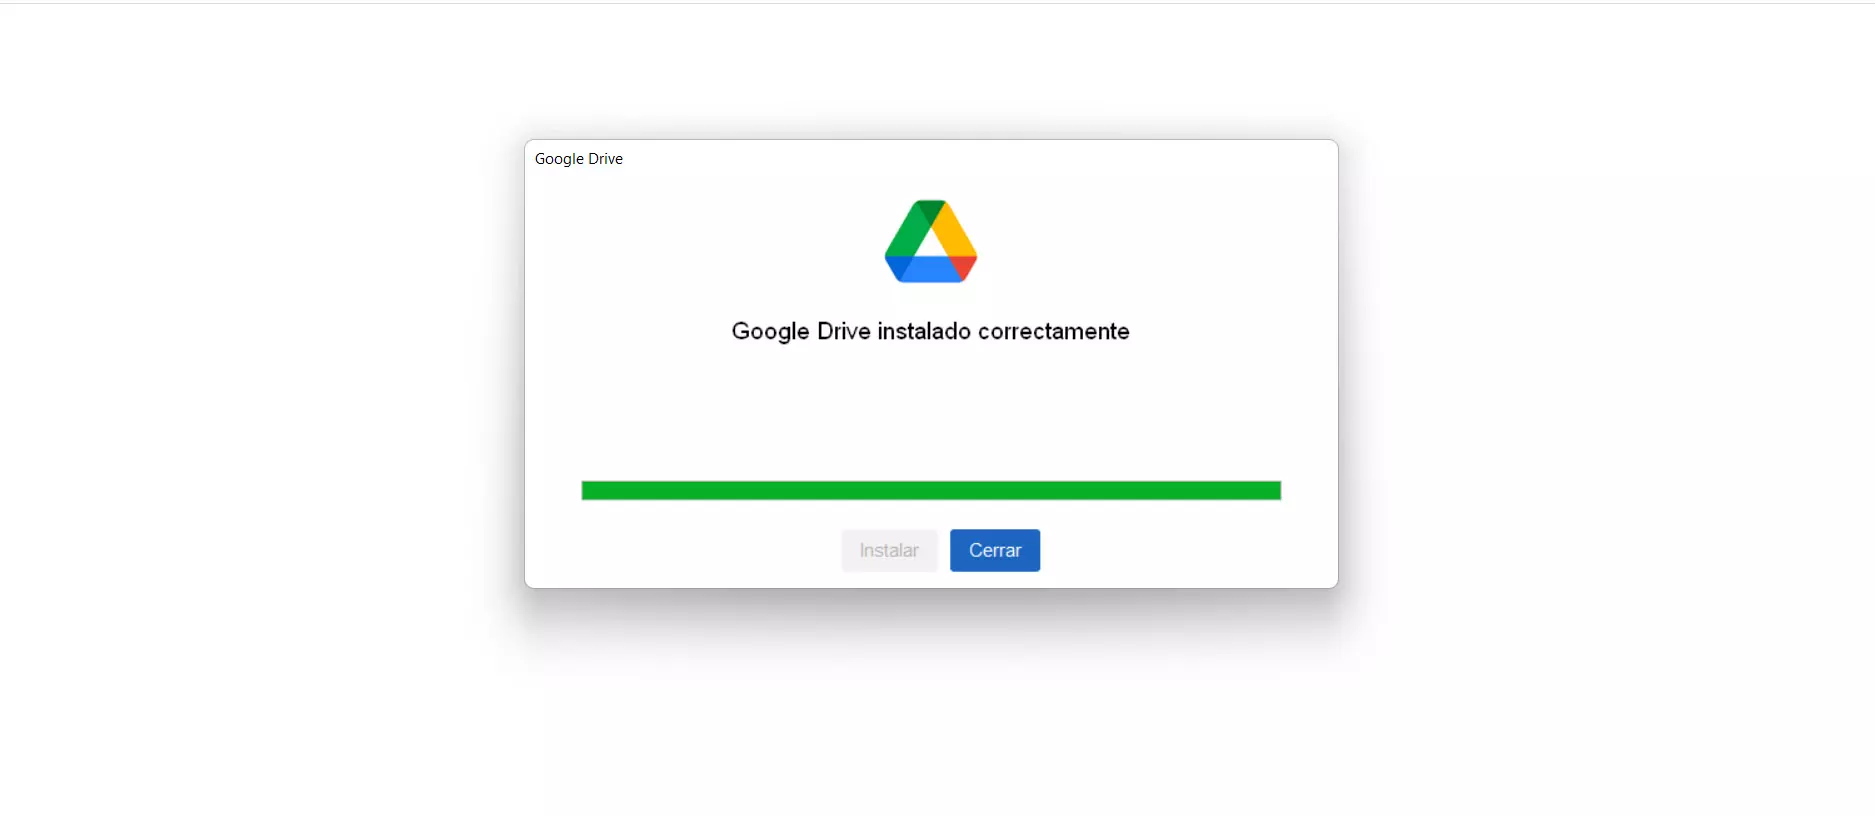 Google Drive installed